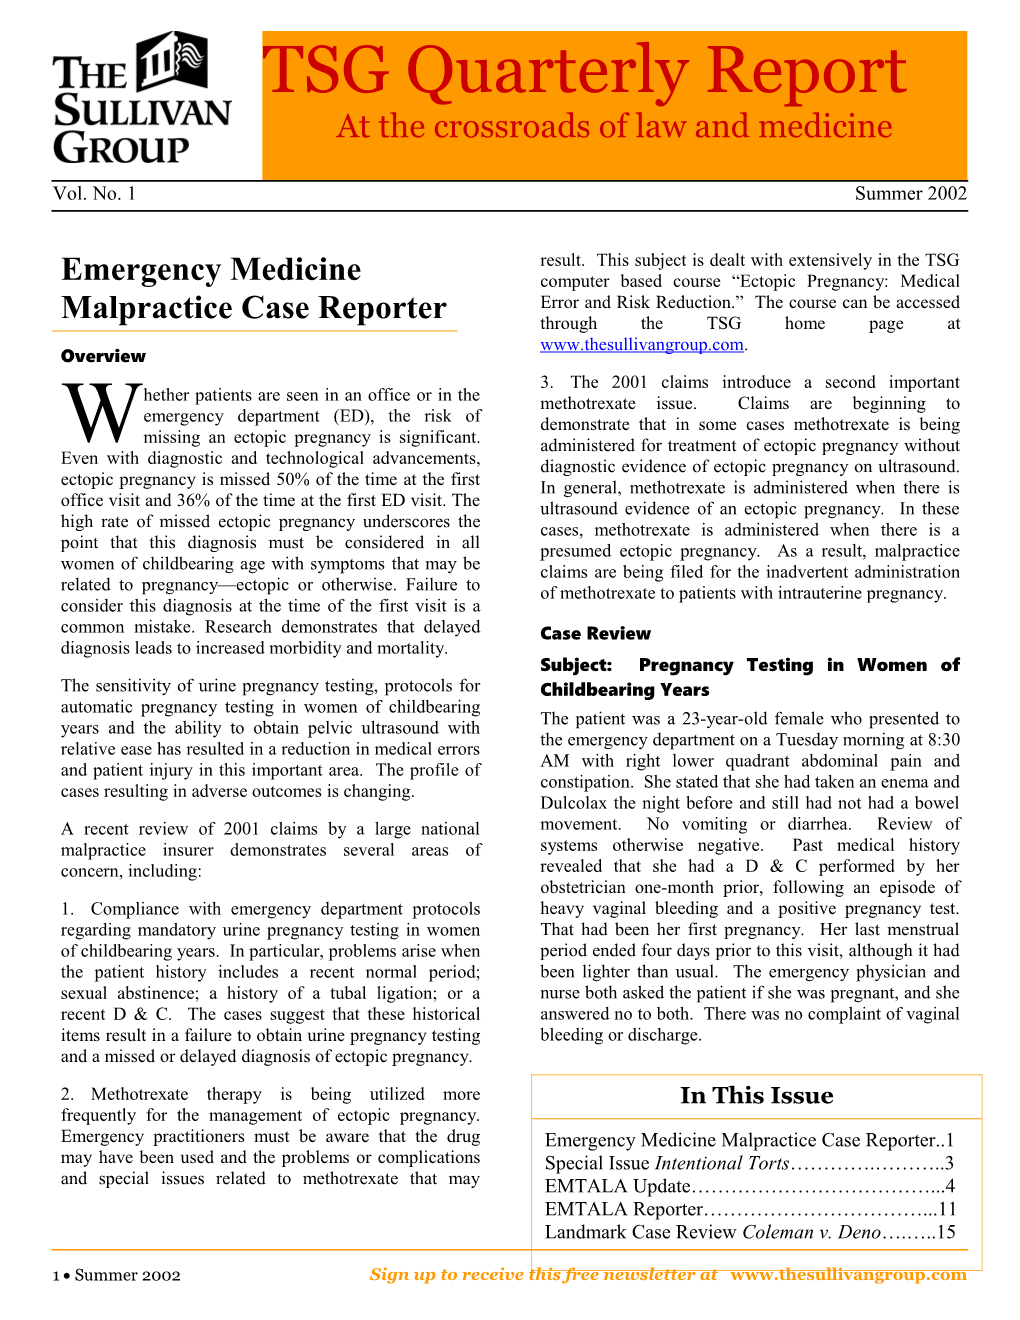 Emergency Medicine Malpractice Case Reporter